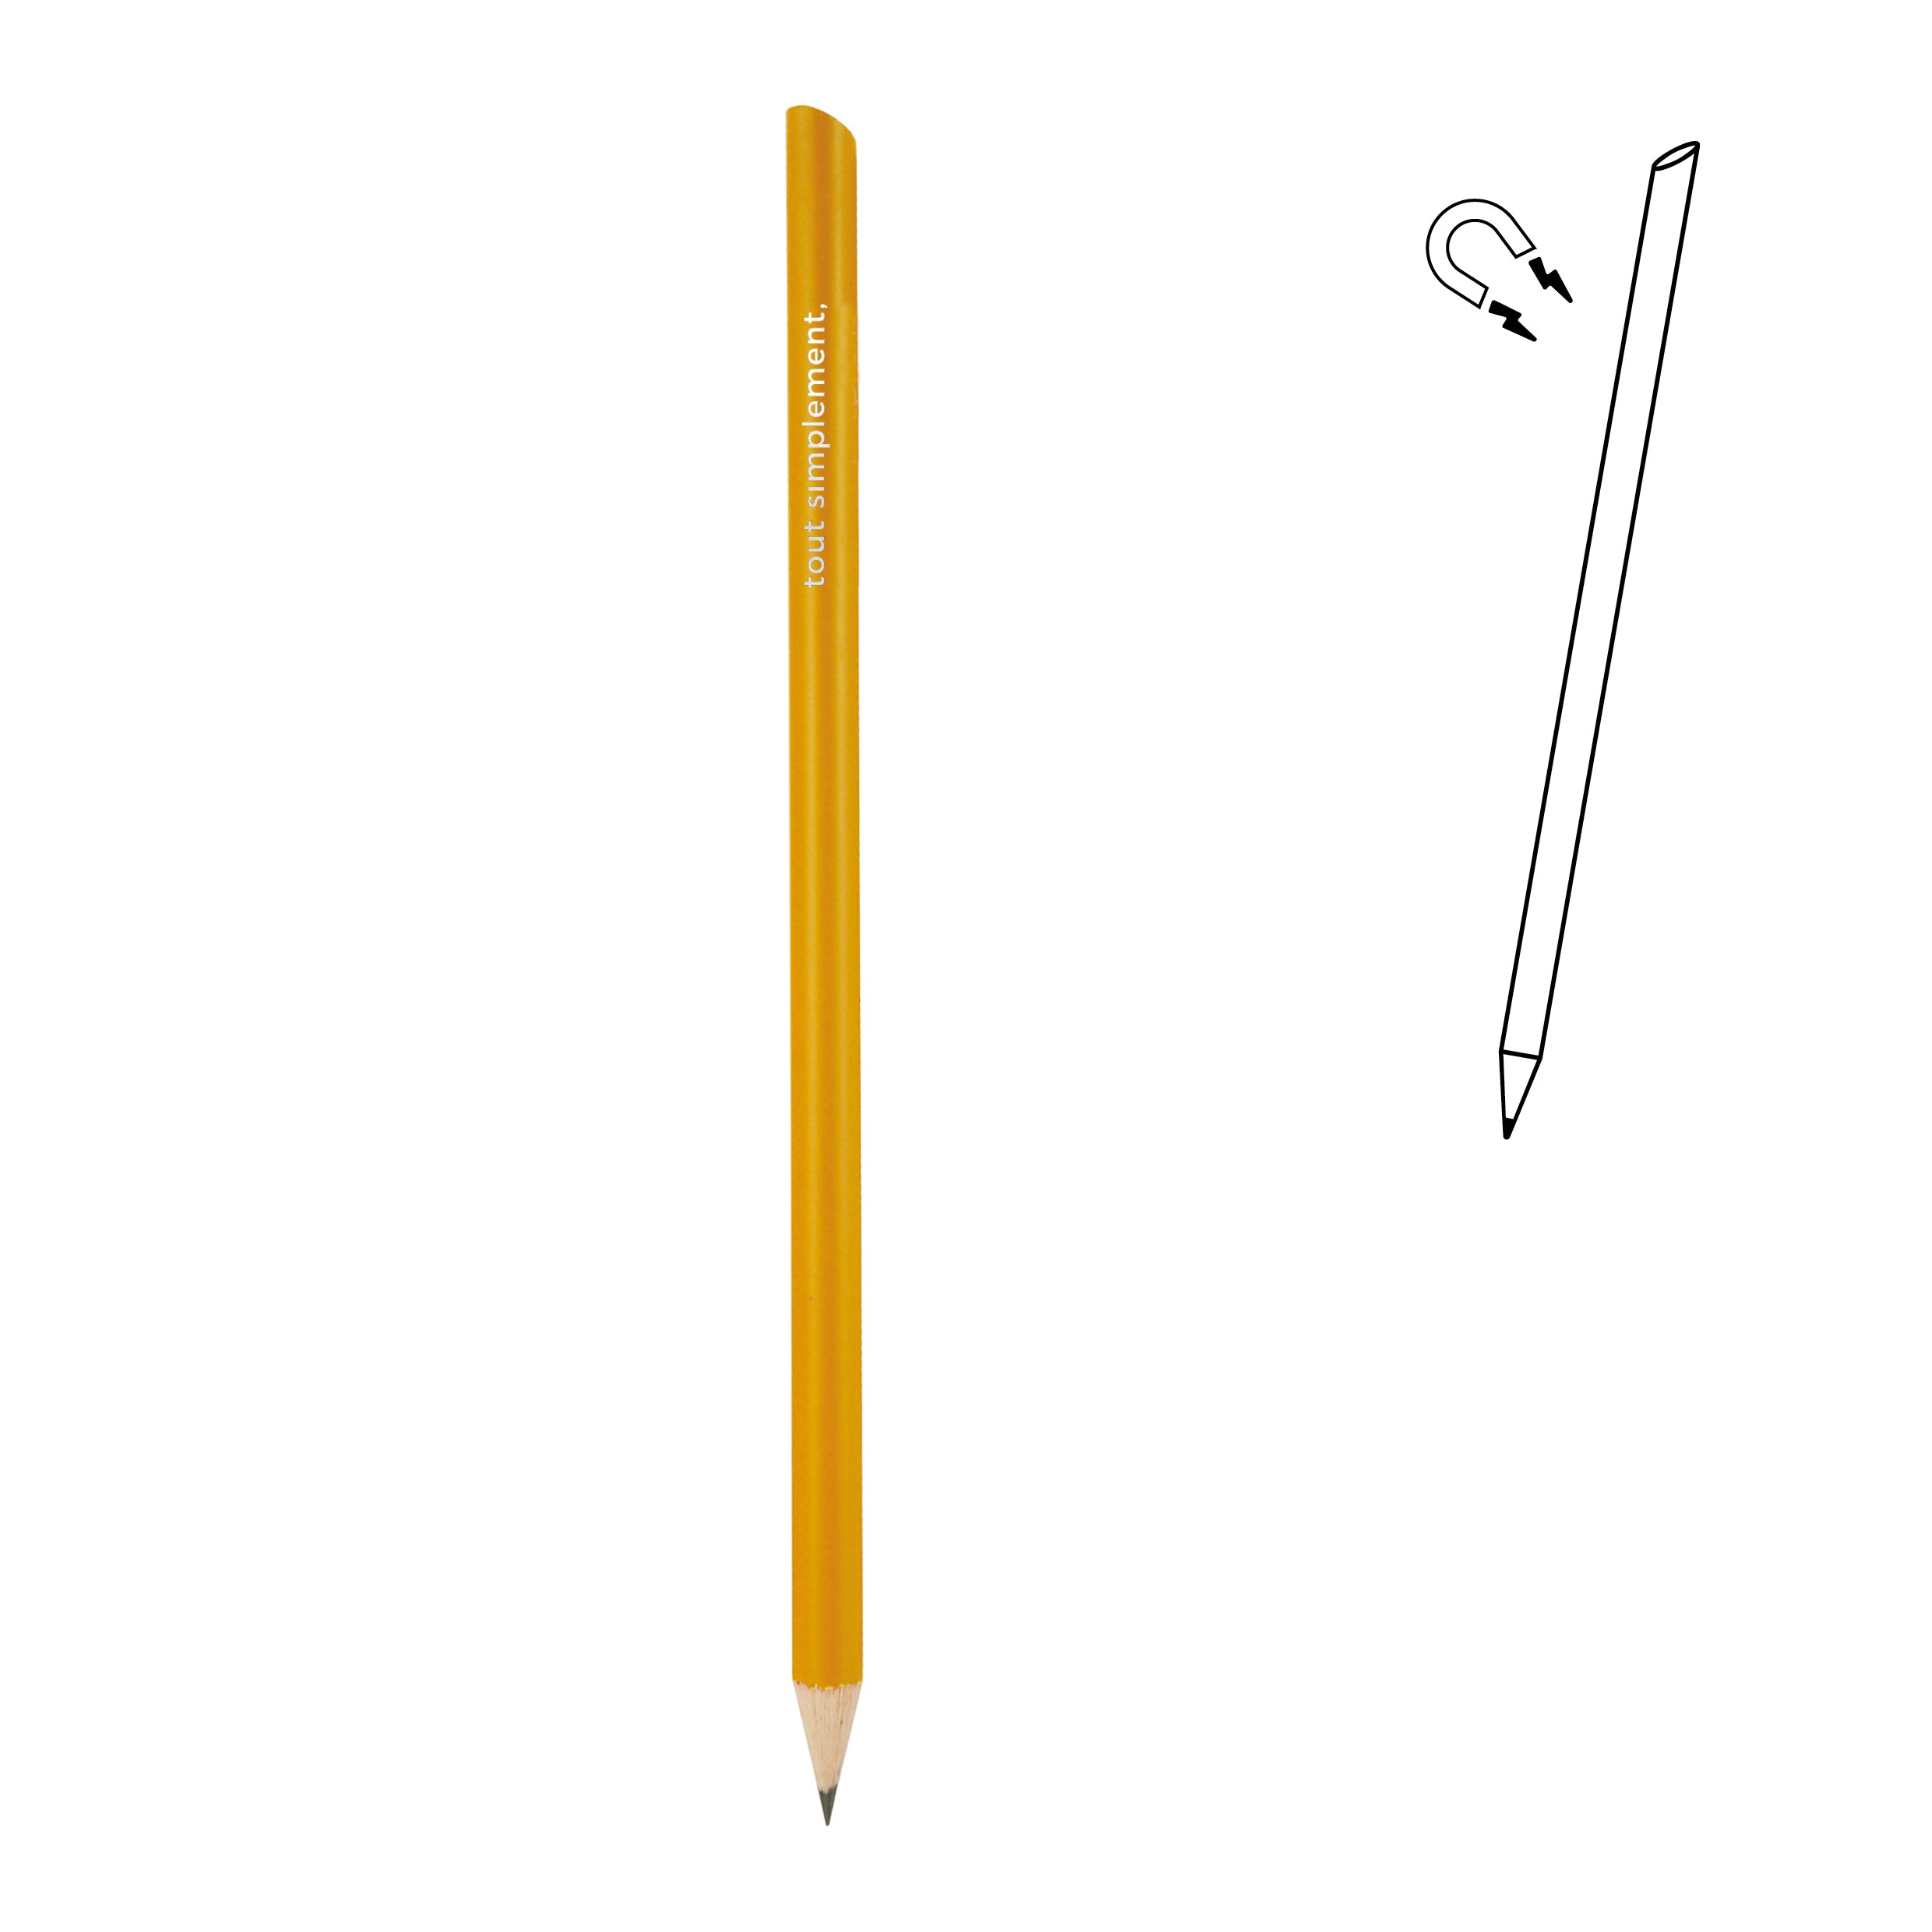 Magnetic pencil